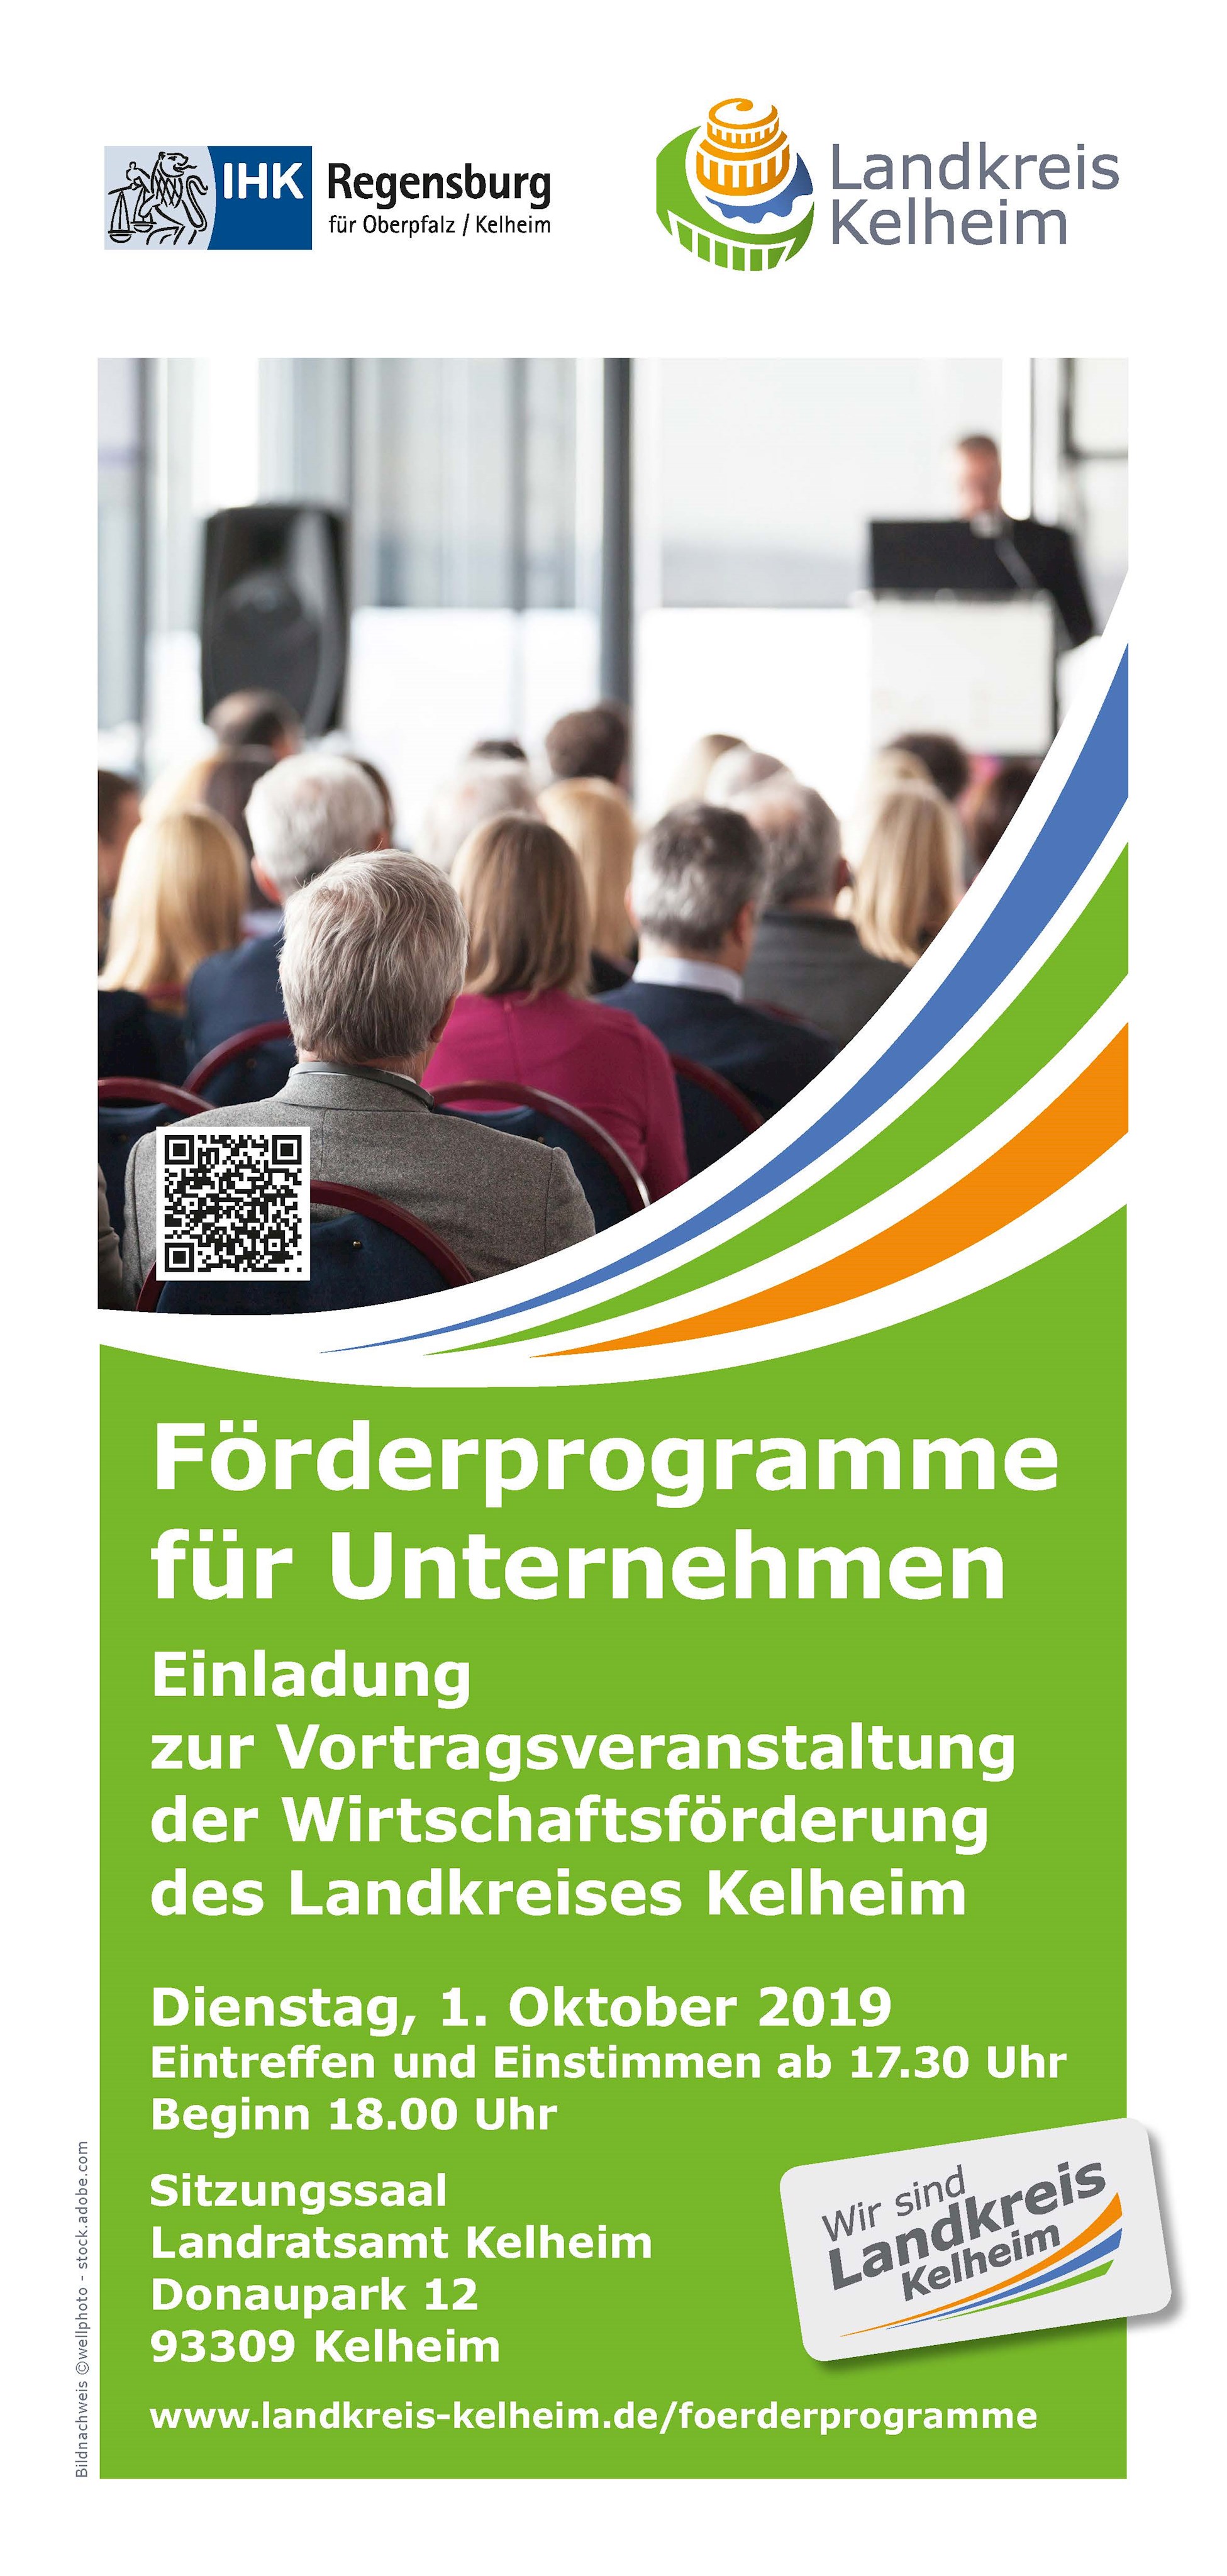 Vortragsveranstaltung: Förderprogramm für Unternehmen am 1. Oktober im Landratsamt Kelheim